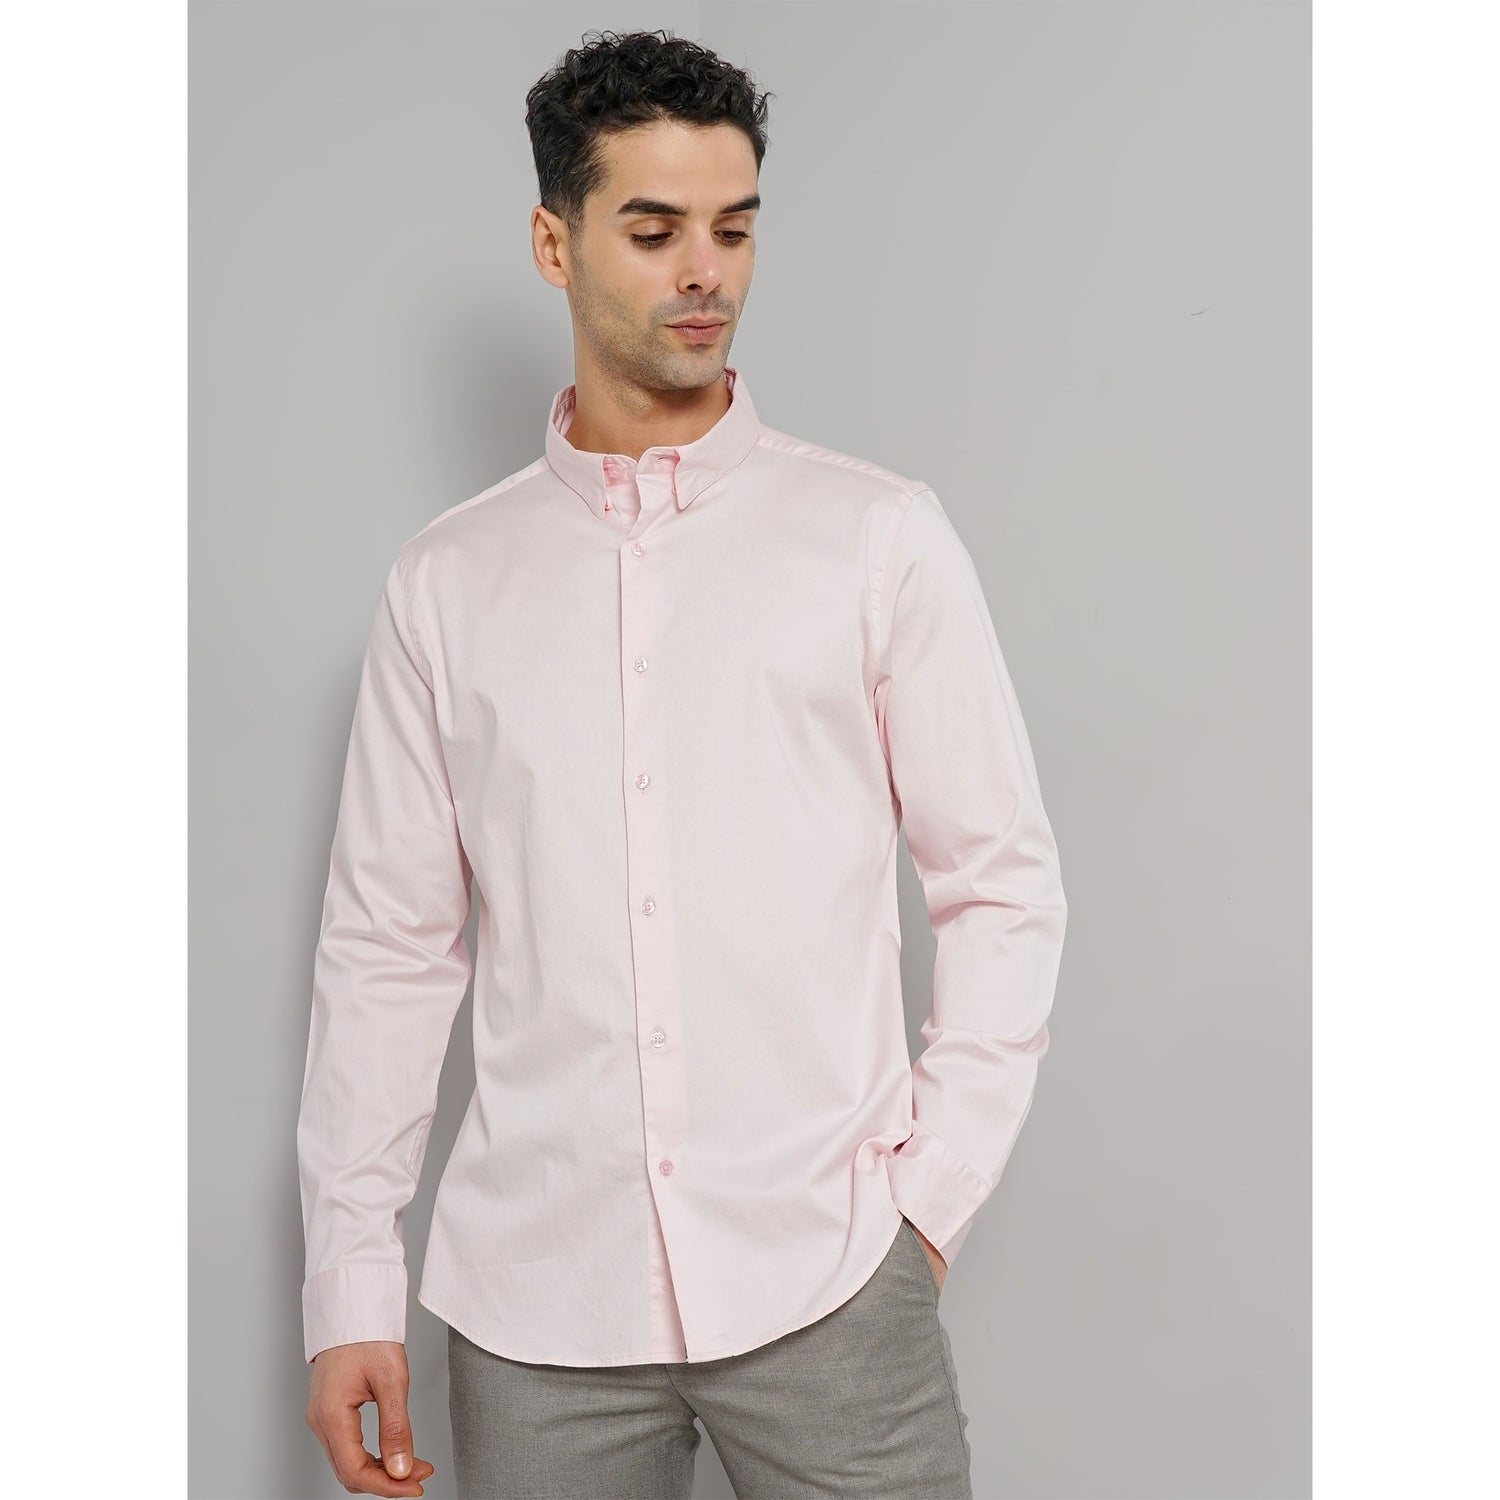 Men's Pink Solid Slim Fit Cotton Formal Shirt (FARARE)